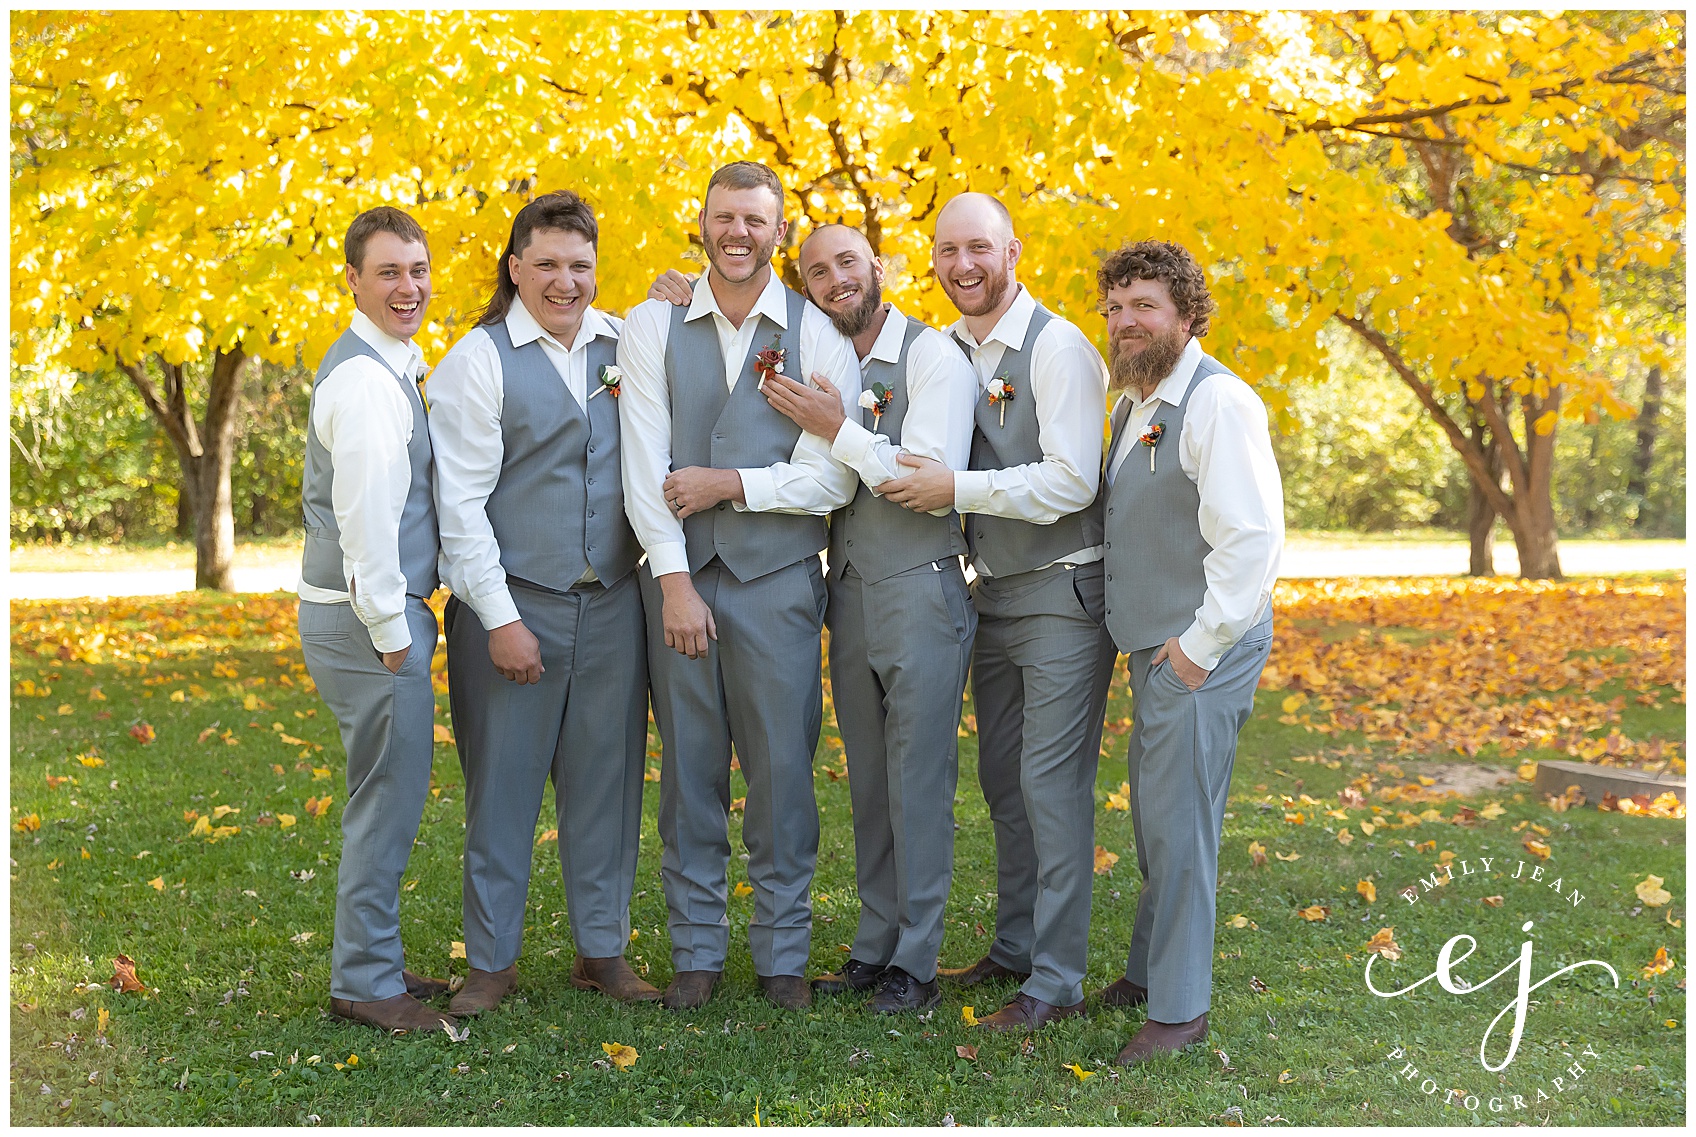 groomsmen laughing wearing grey vest and white shirts